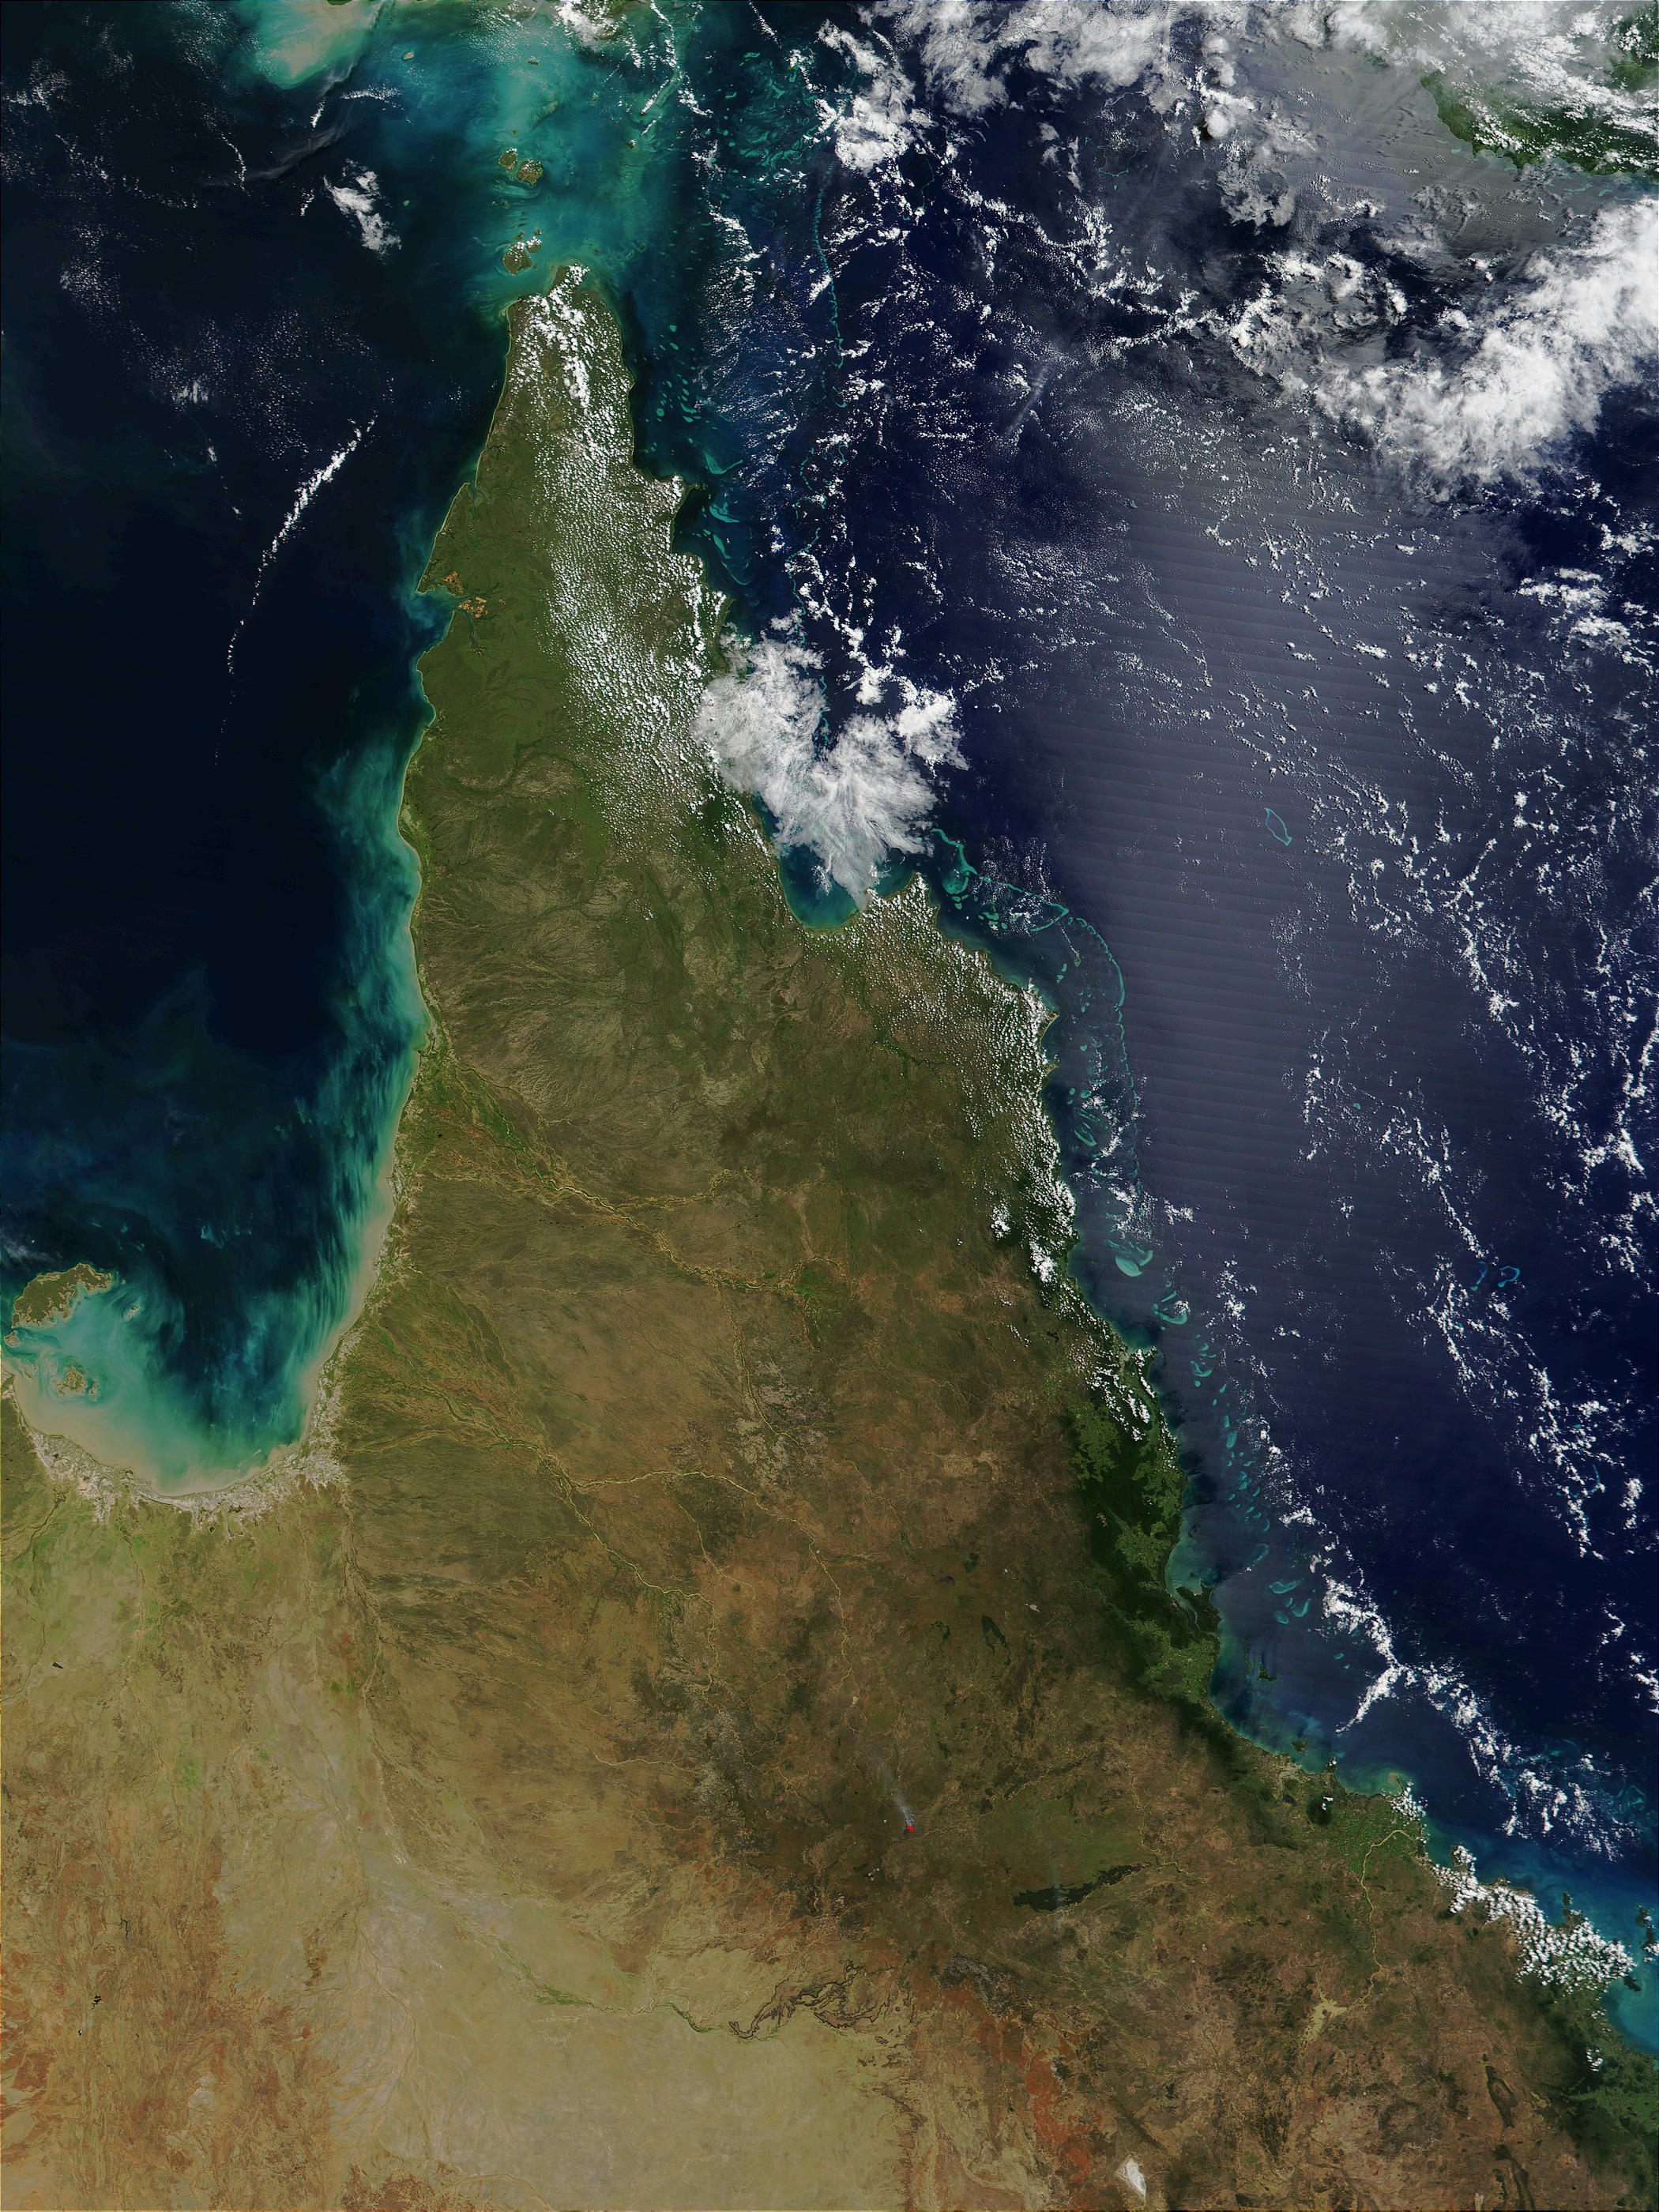 Cape York Peninsula, Queensland, Australia - related image preview